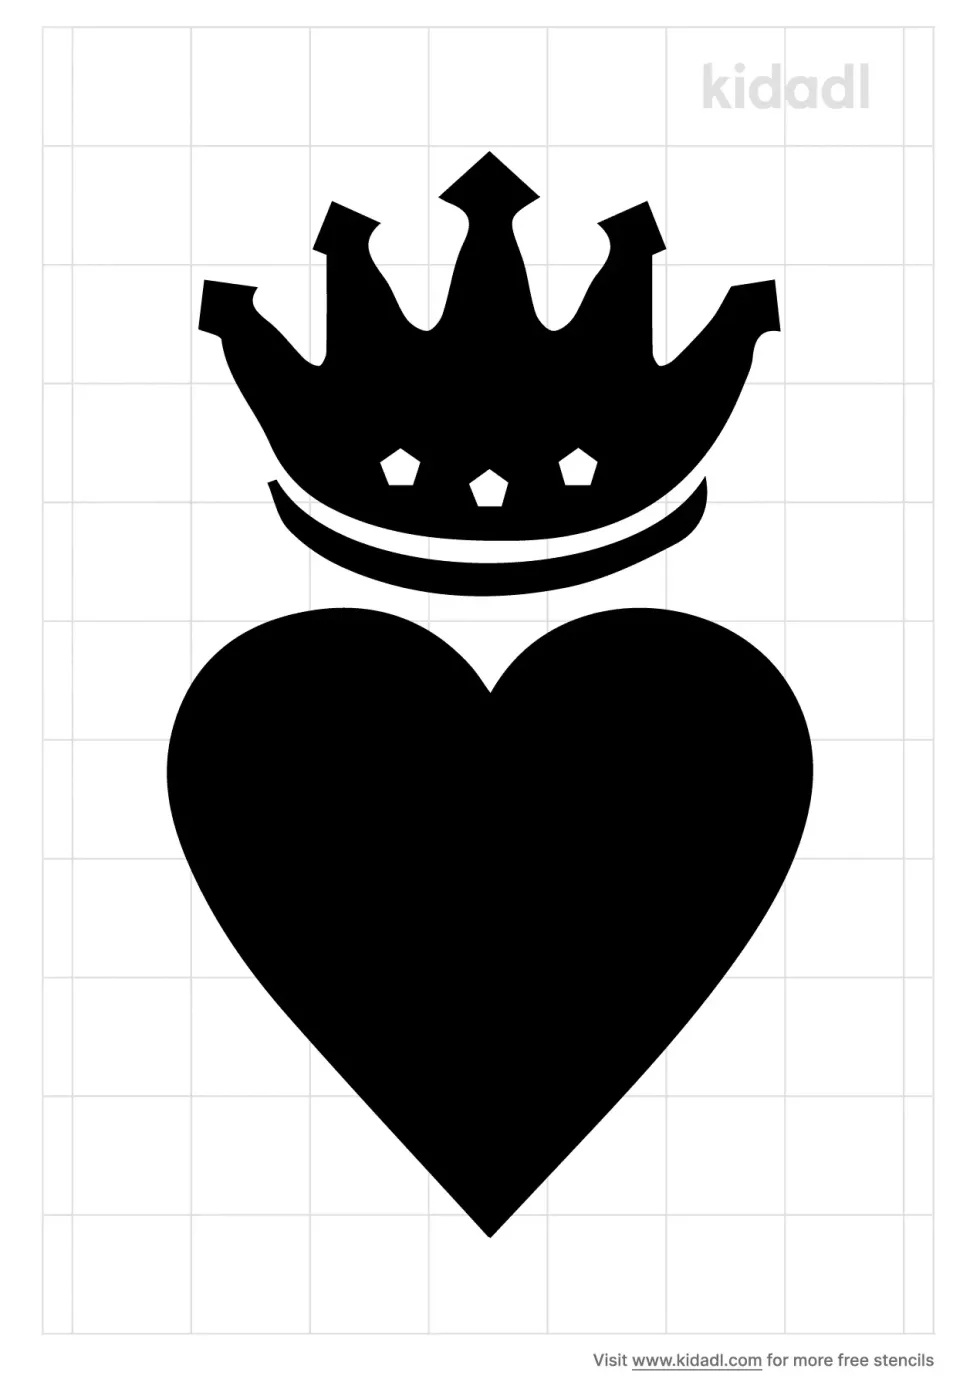 Kingdom Heart